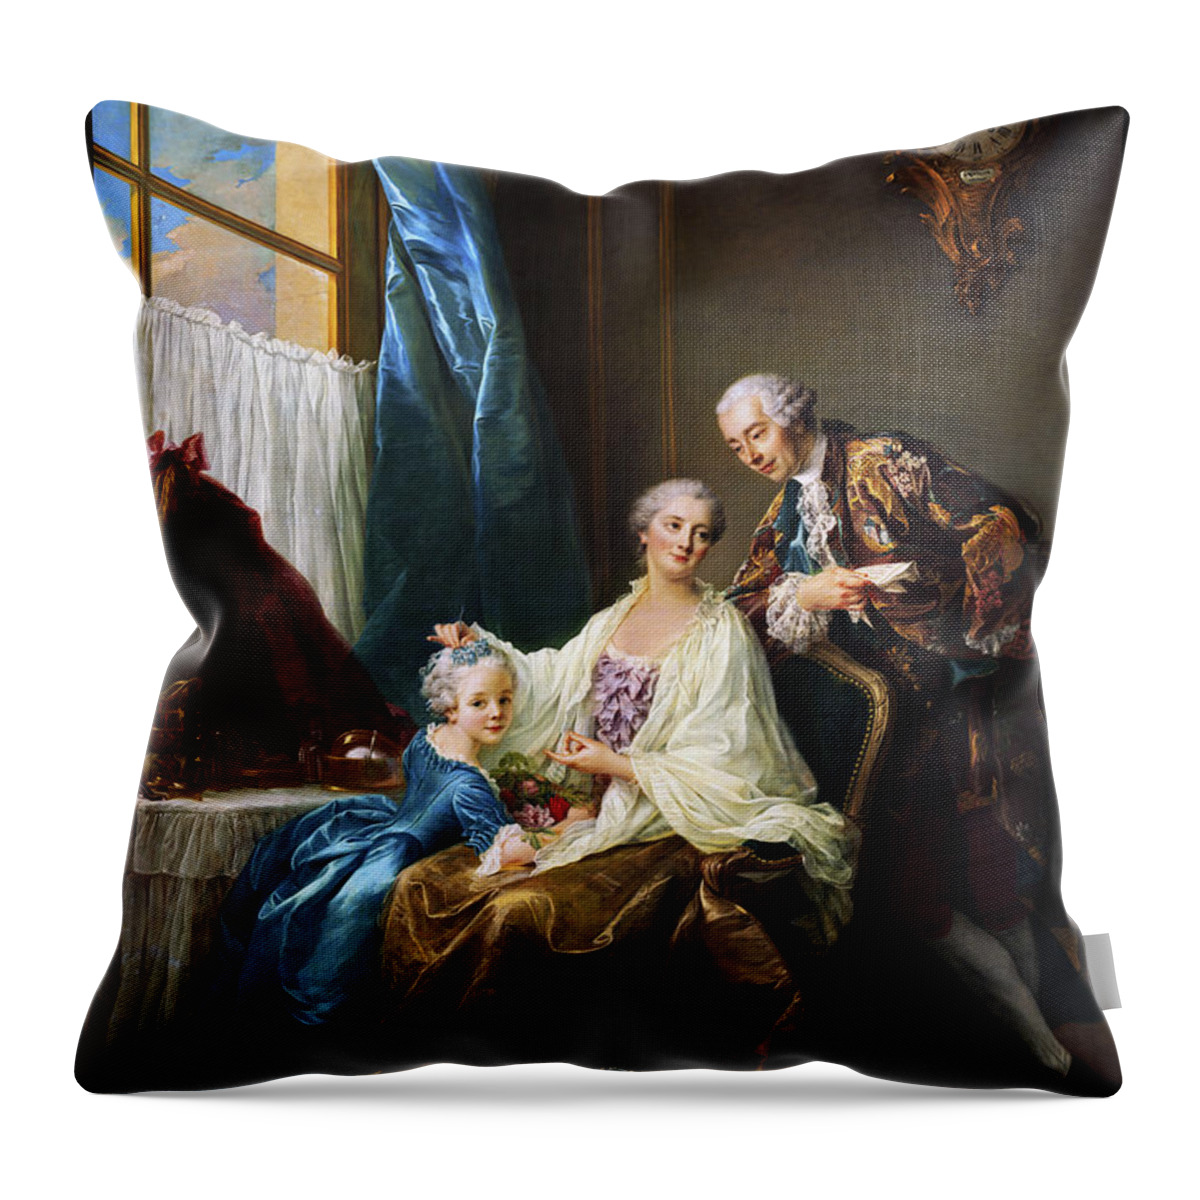 Family Portrait Throw Pillow featuring the painting Family Portrait by Francois-Hubert Drouais by Rolando Burbon